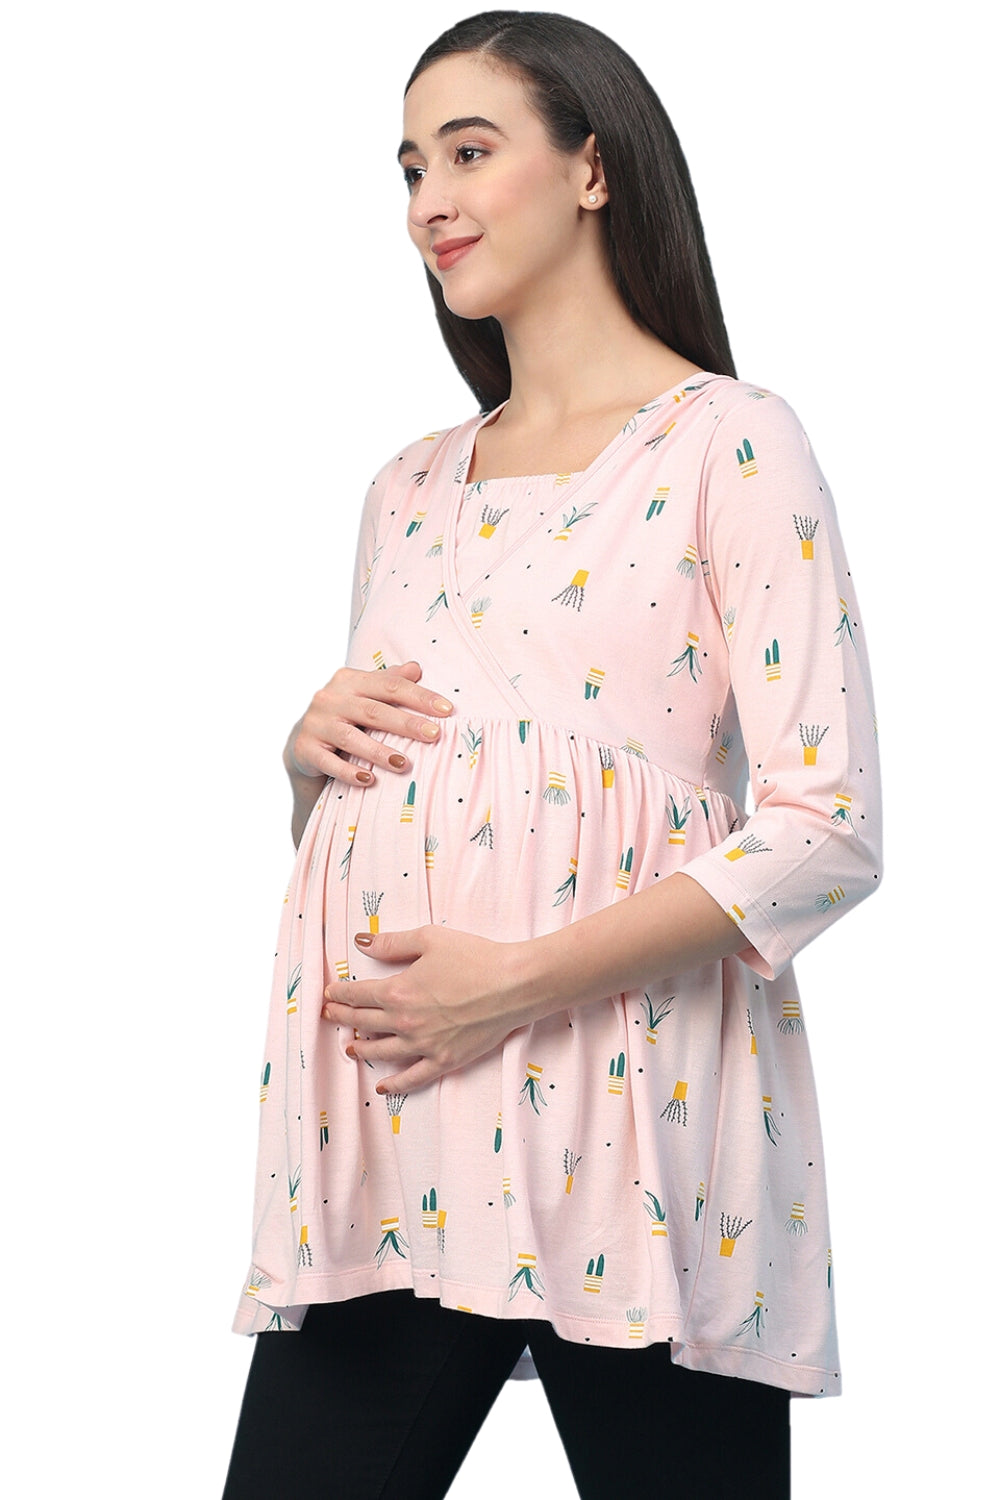 Organic Healthy Full Sleeves Maternity Top_ISML008-Pink Dogwood